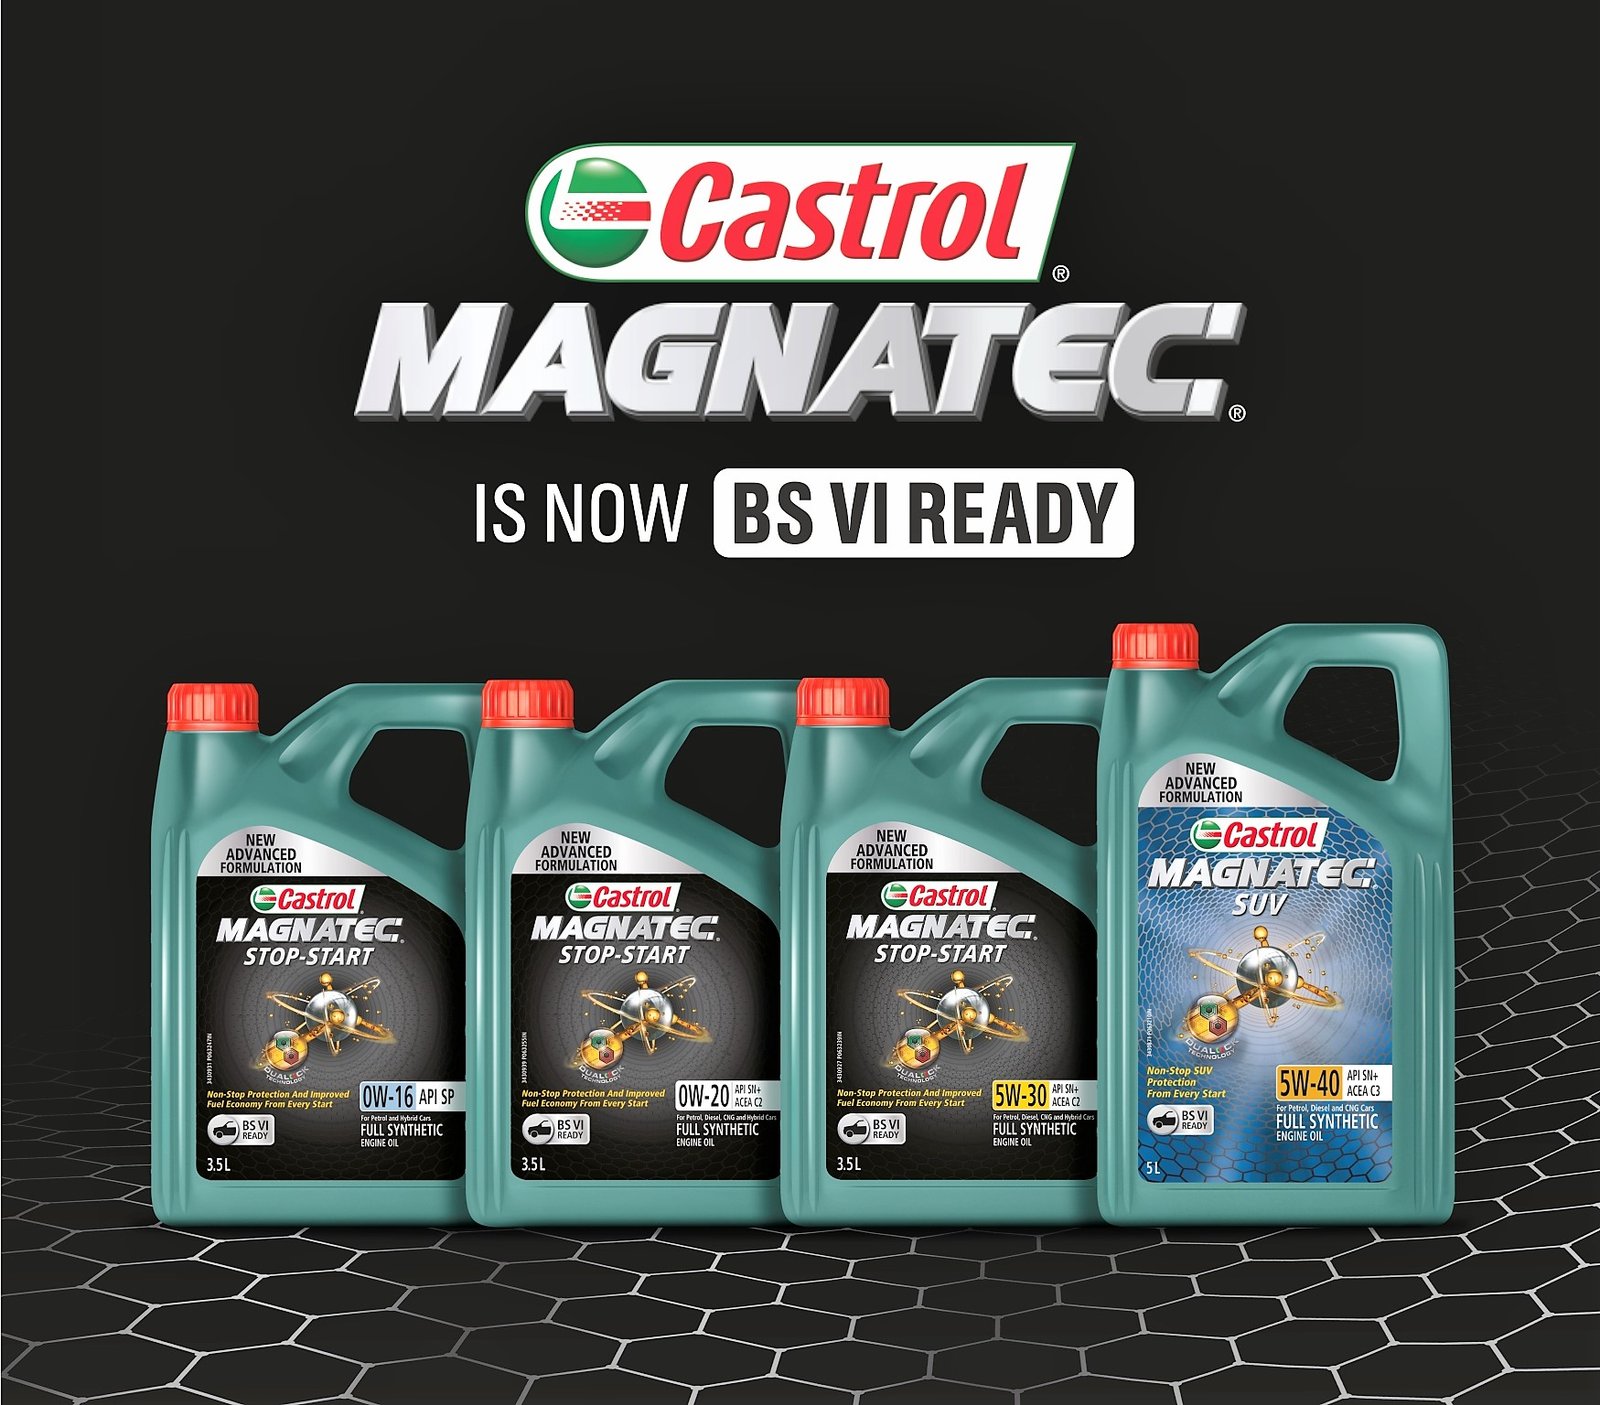 Castrol Magnatec engine oils